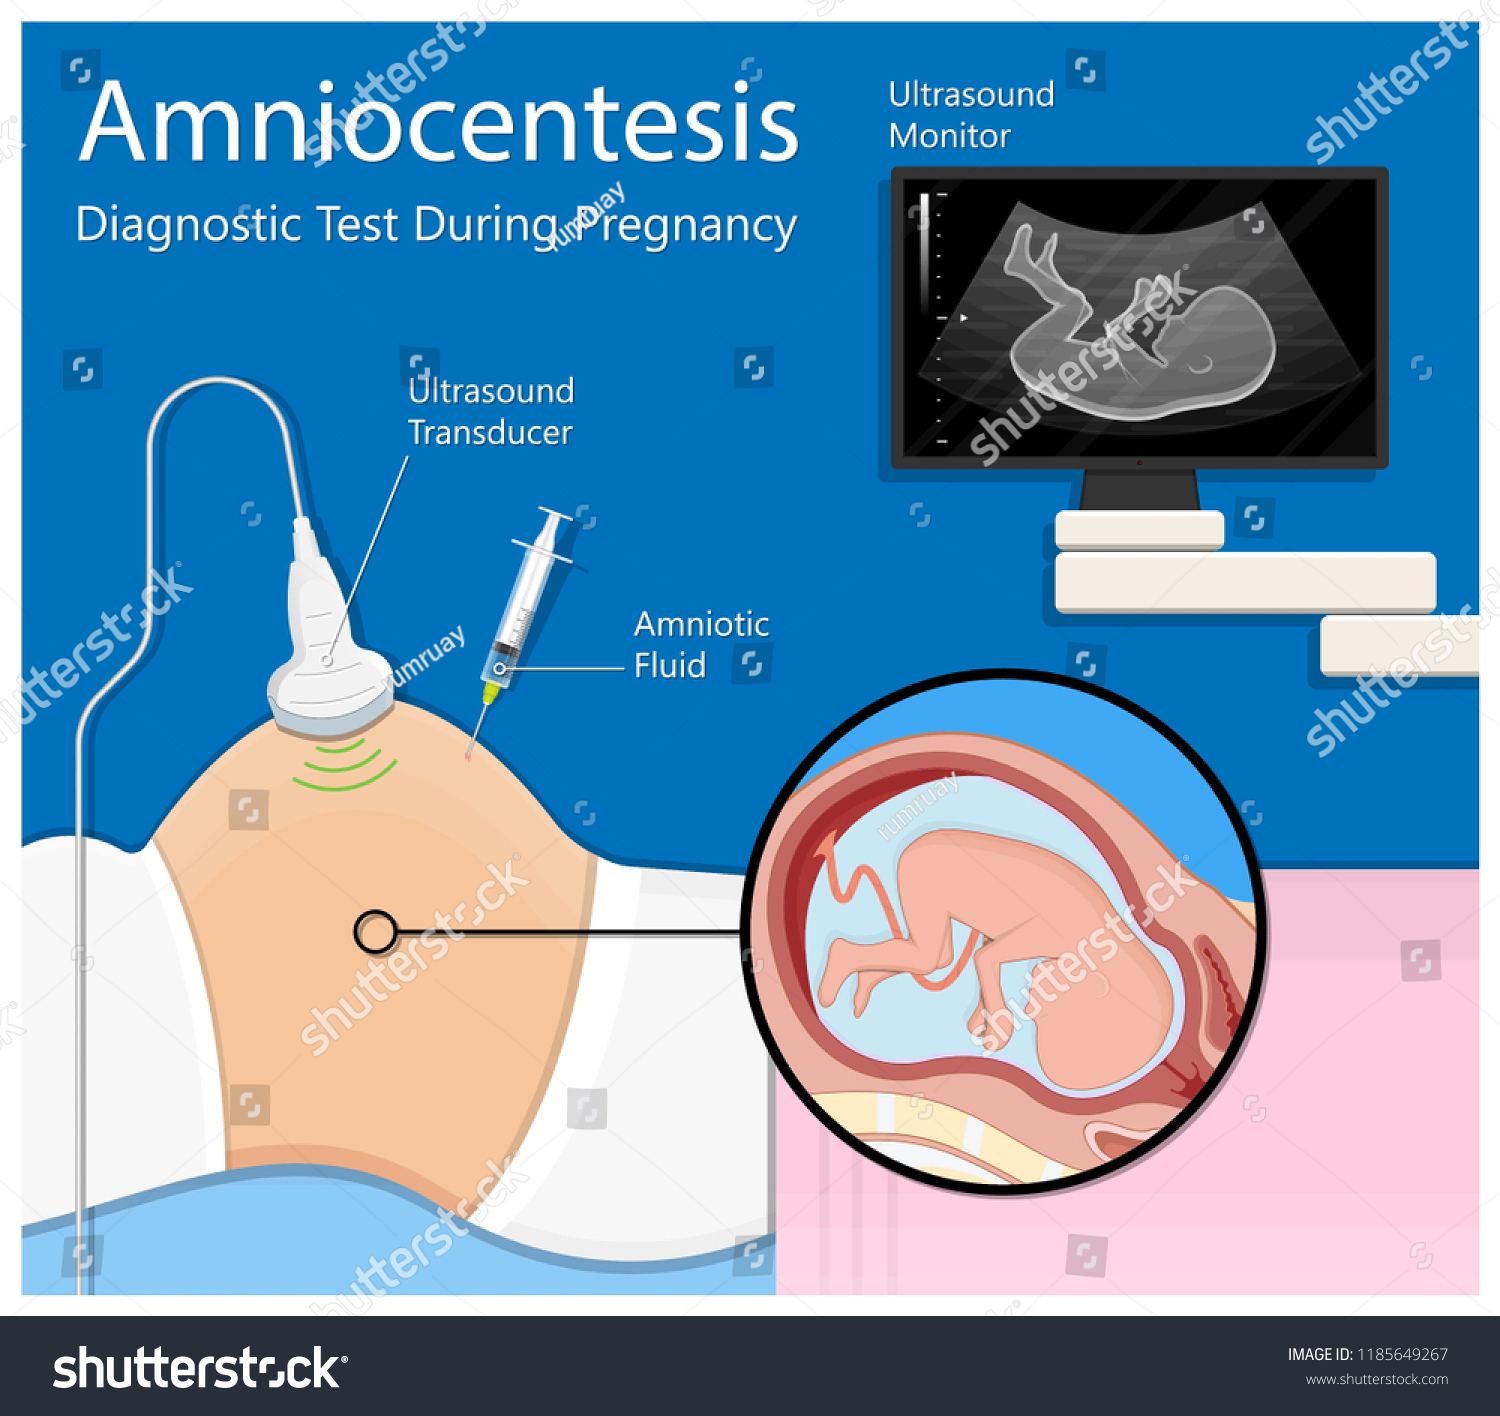 Amniocentesis Diagnostic Test Treat Lab Analysis Vector De Stock Libre De Regalías 1185649267 4359